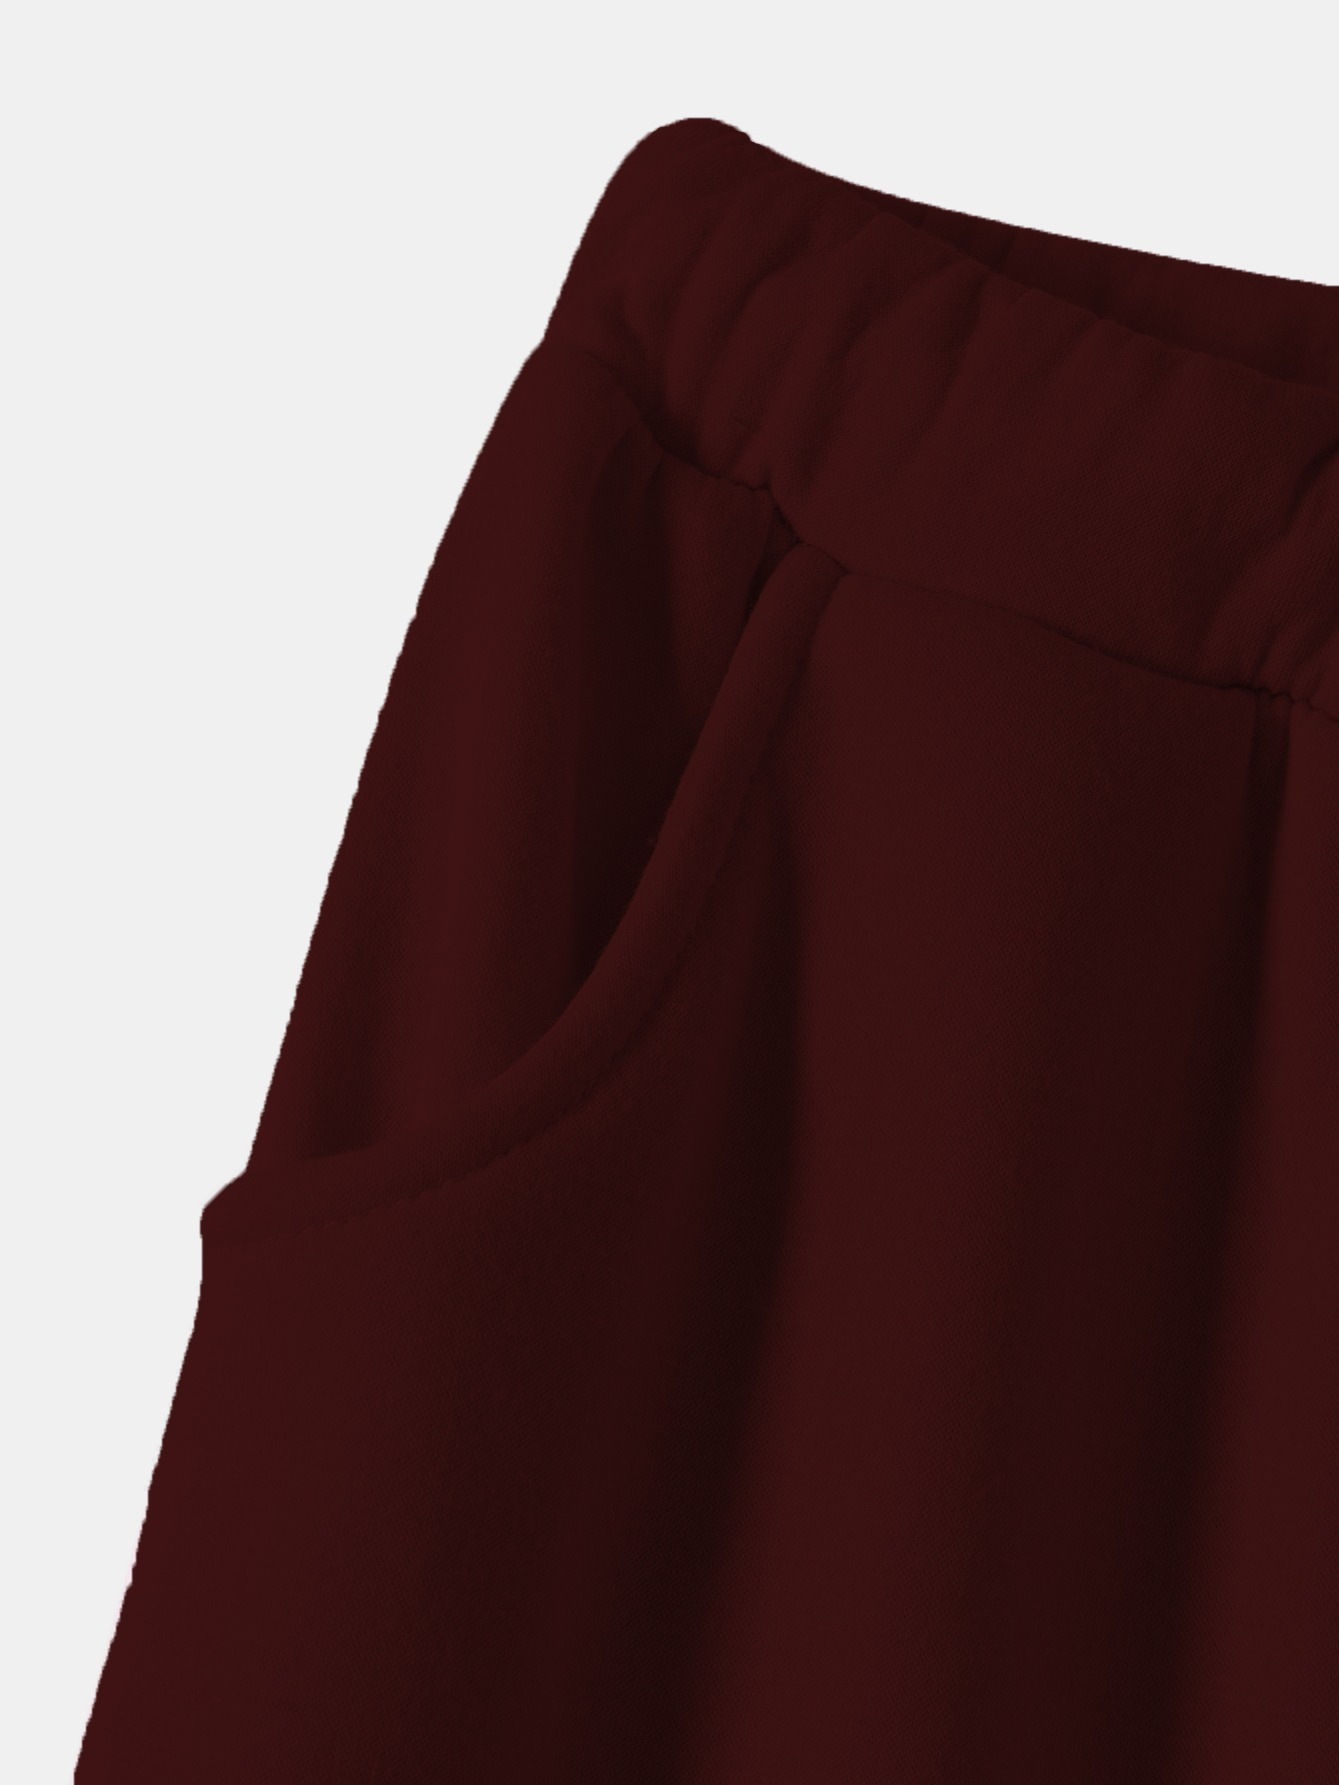 solid drawstring thermal sweatpants versatile loose comfy jogger pants womens clothing details 12